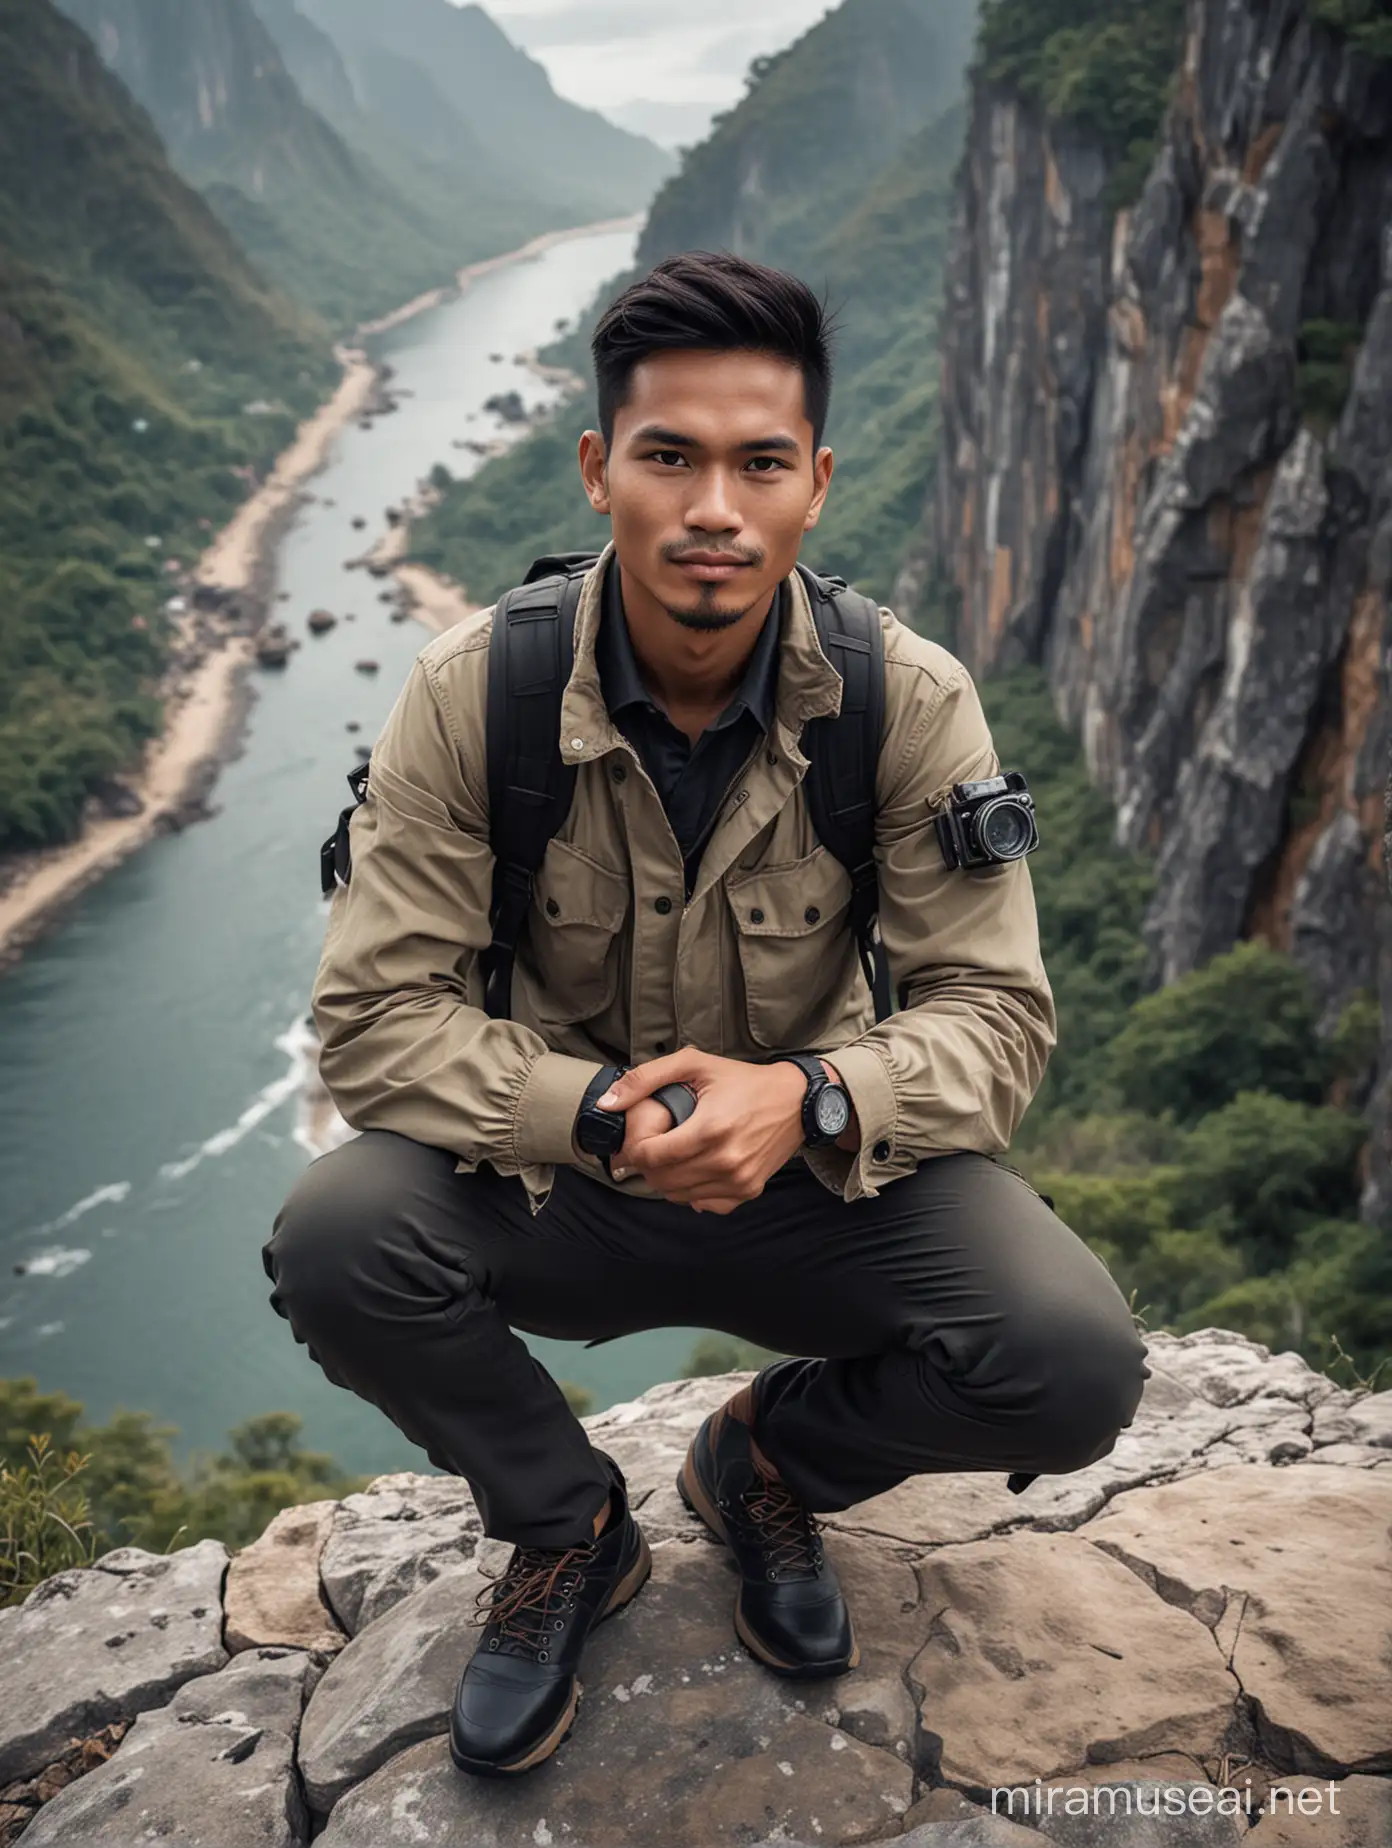 Young Adventurer Capturing Cliffside Beauty